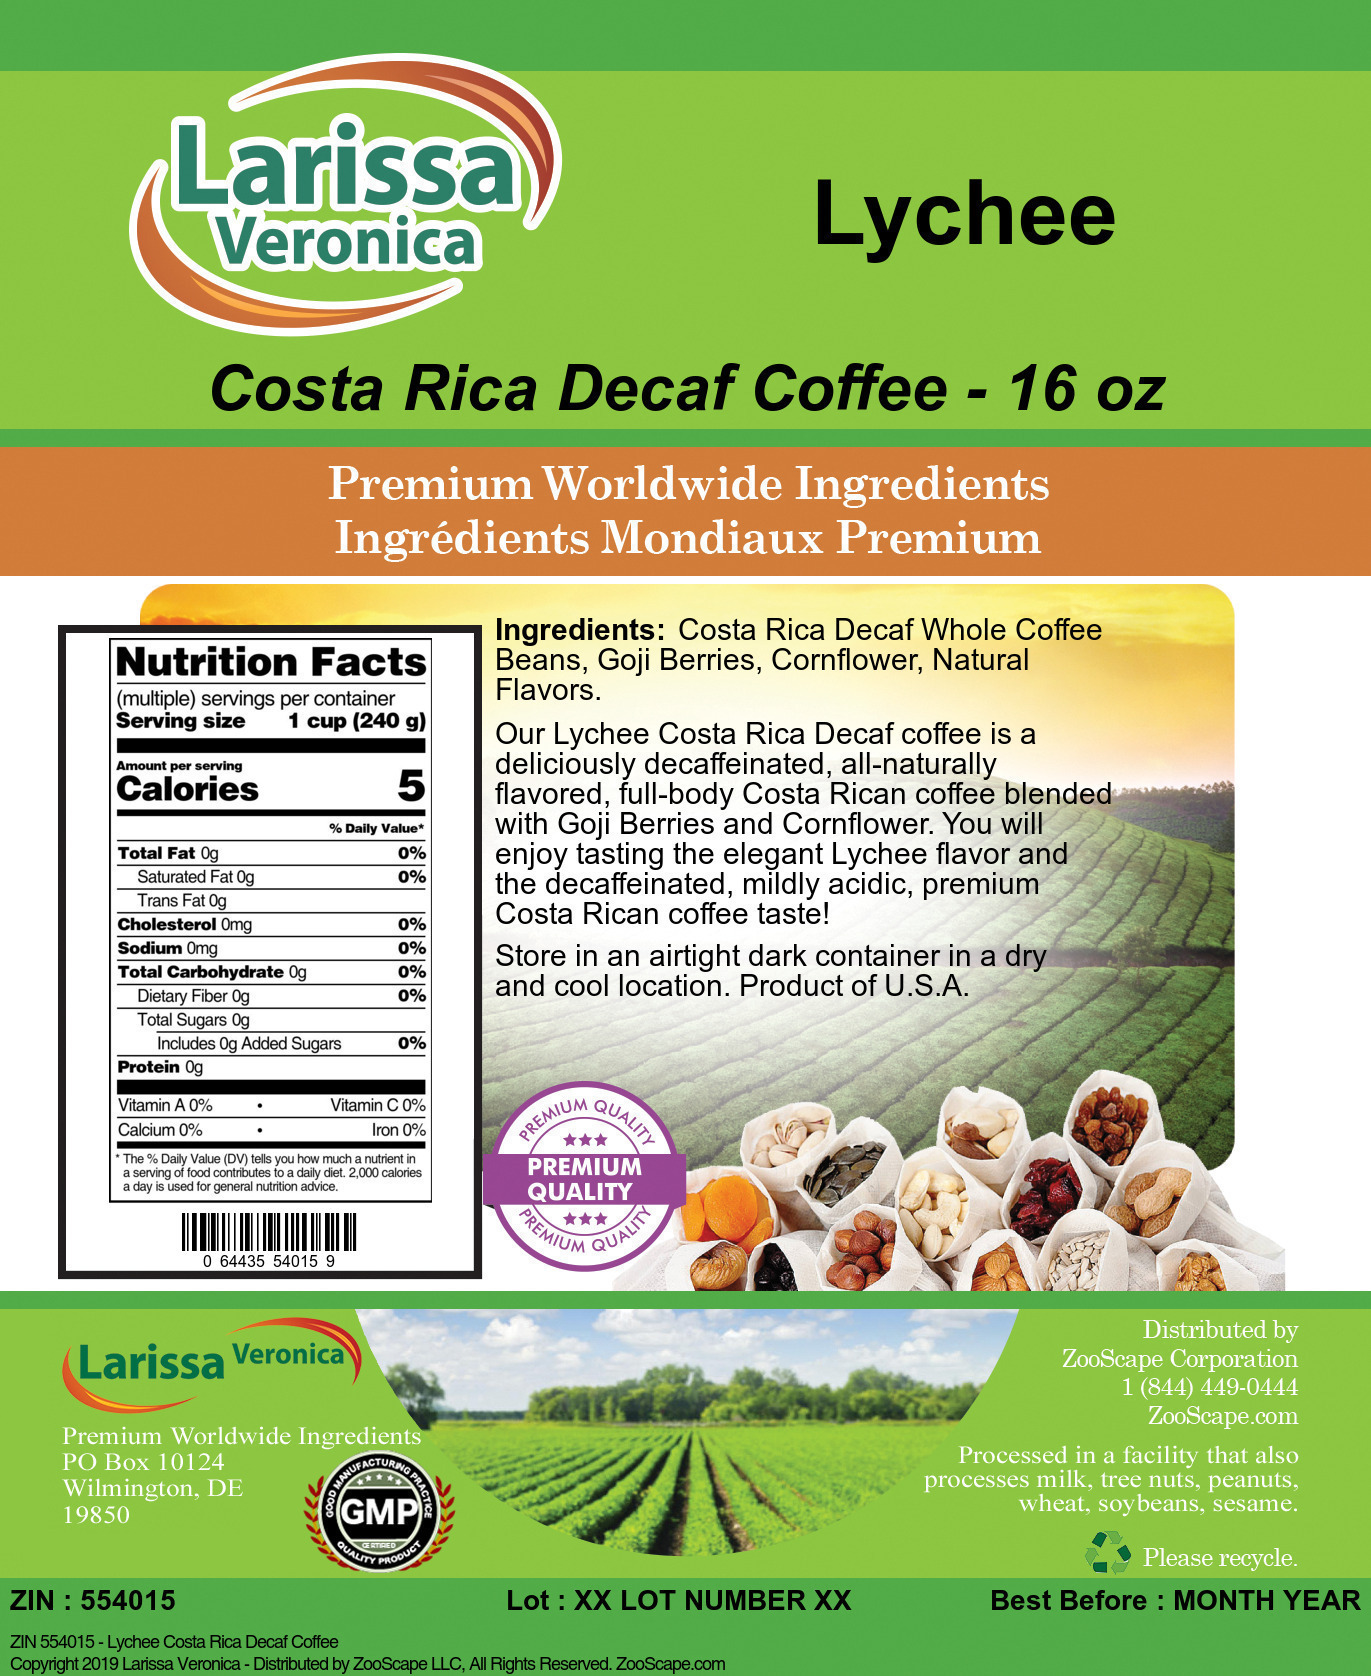 Lychee Costa Rica Decaf Coffee - Label